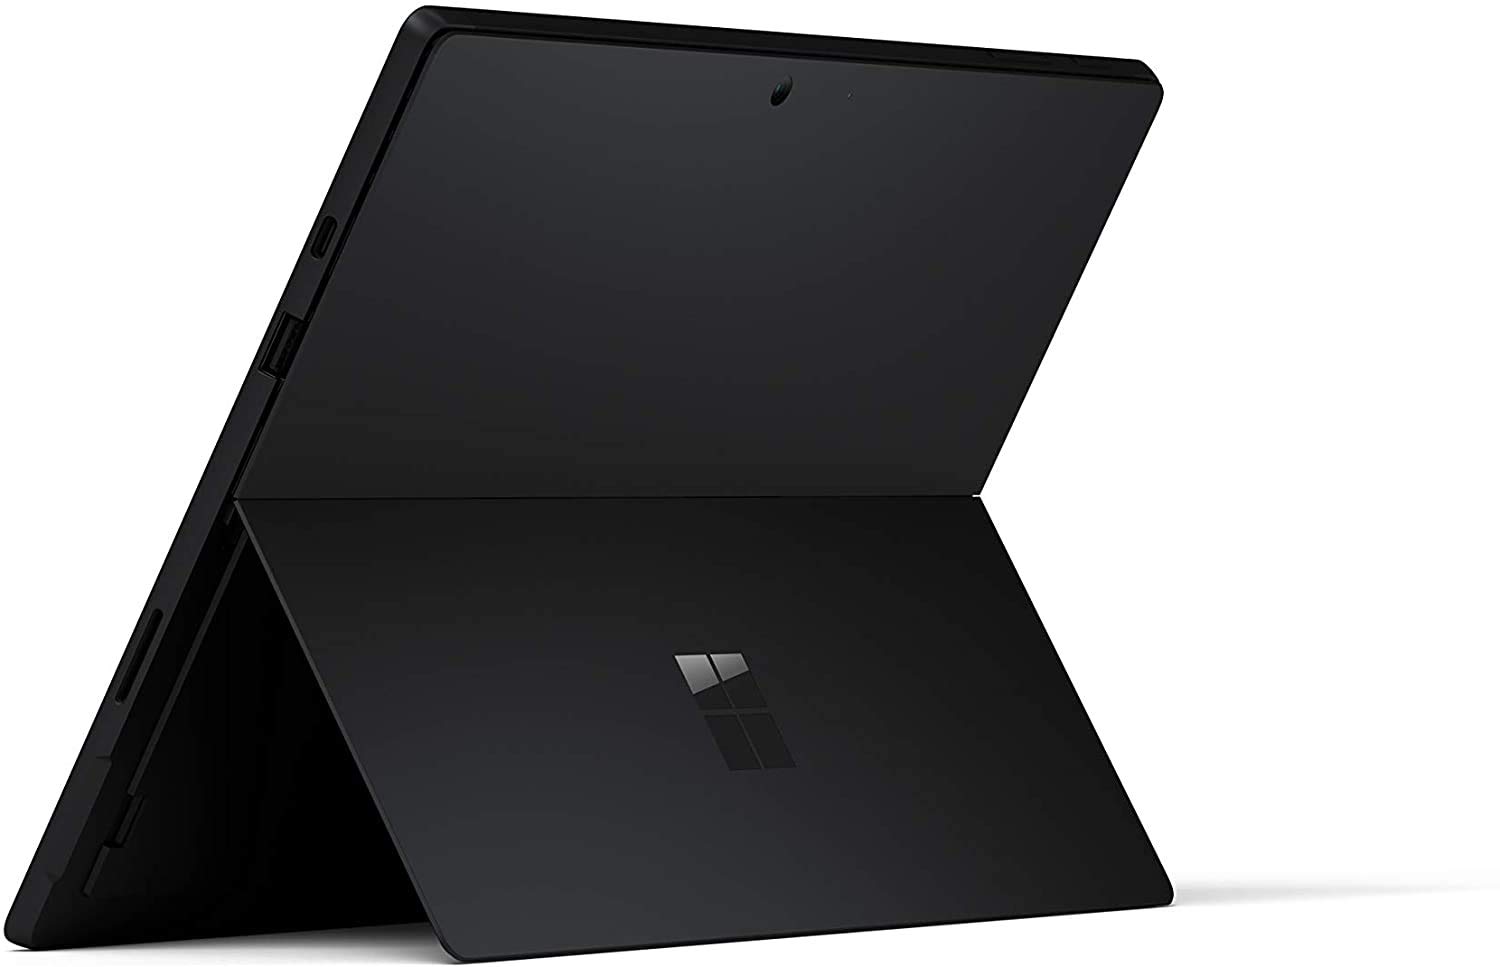 Microsoft Surface Pro 7 (PVT-00015) | 12.3in (2736 x 1824) Touch-Screen | Intel Core i7 Processor | 16GB RAM | 256GB SSD Storage | Windows 10 Pro | Black